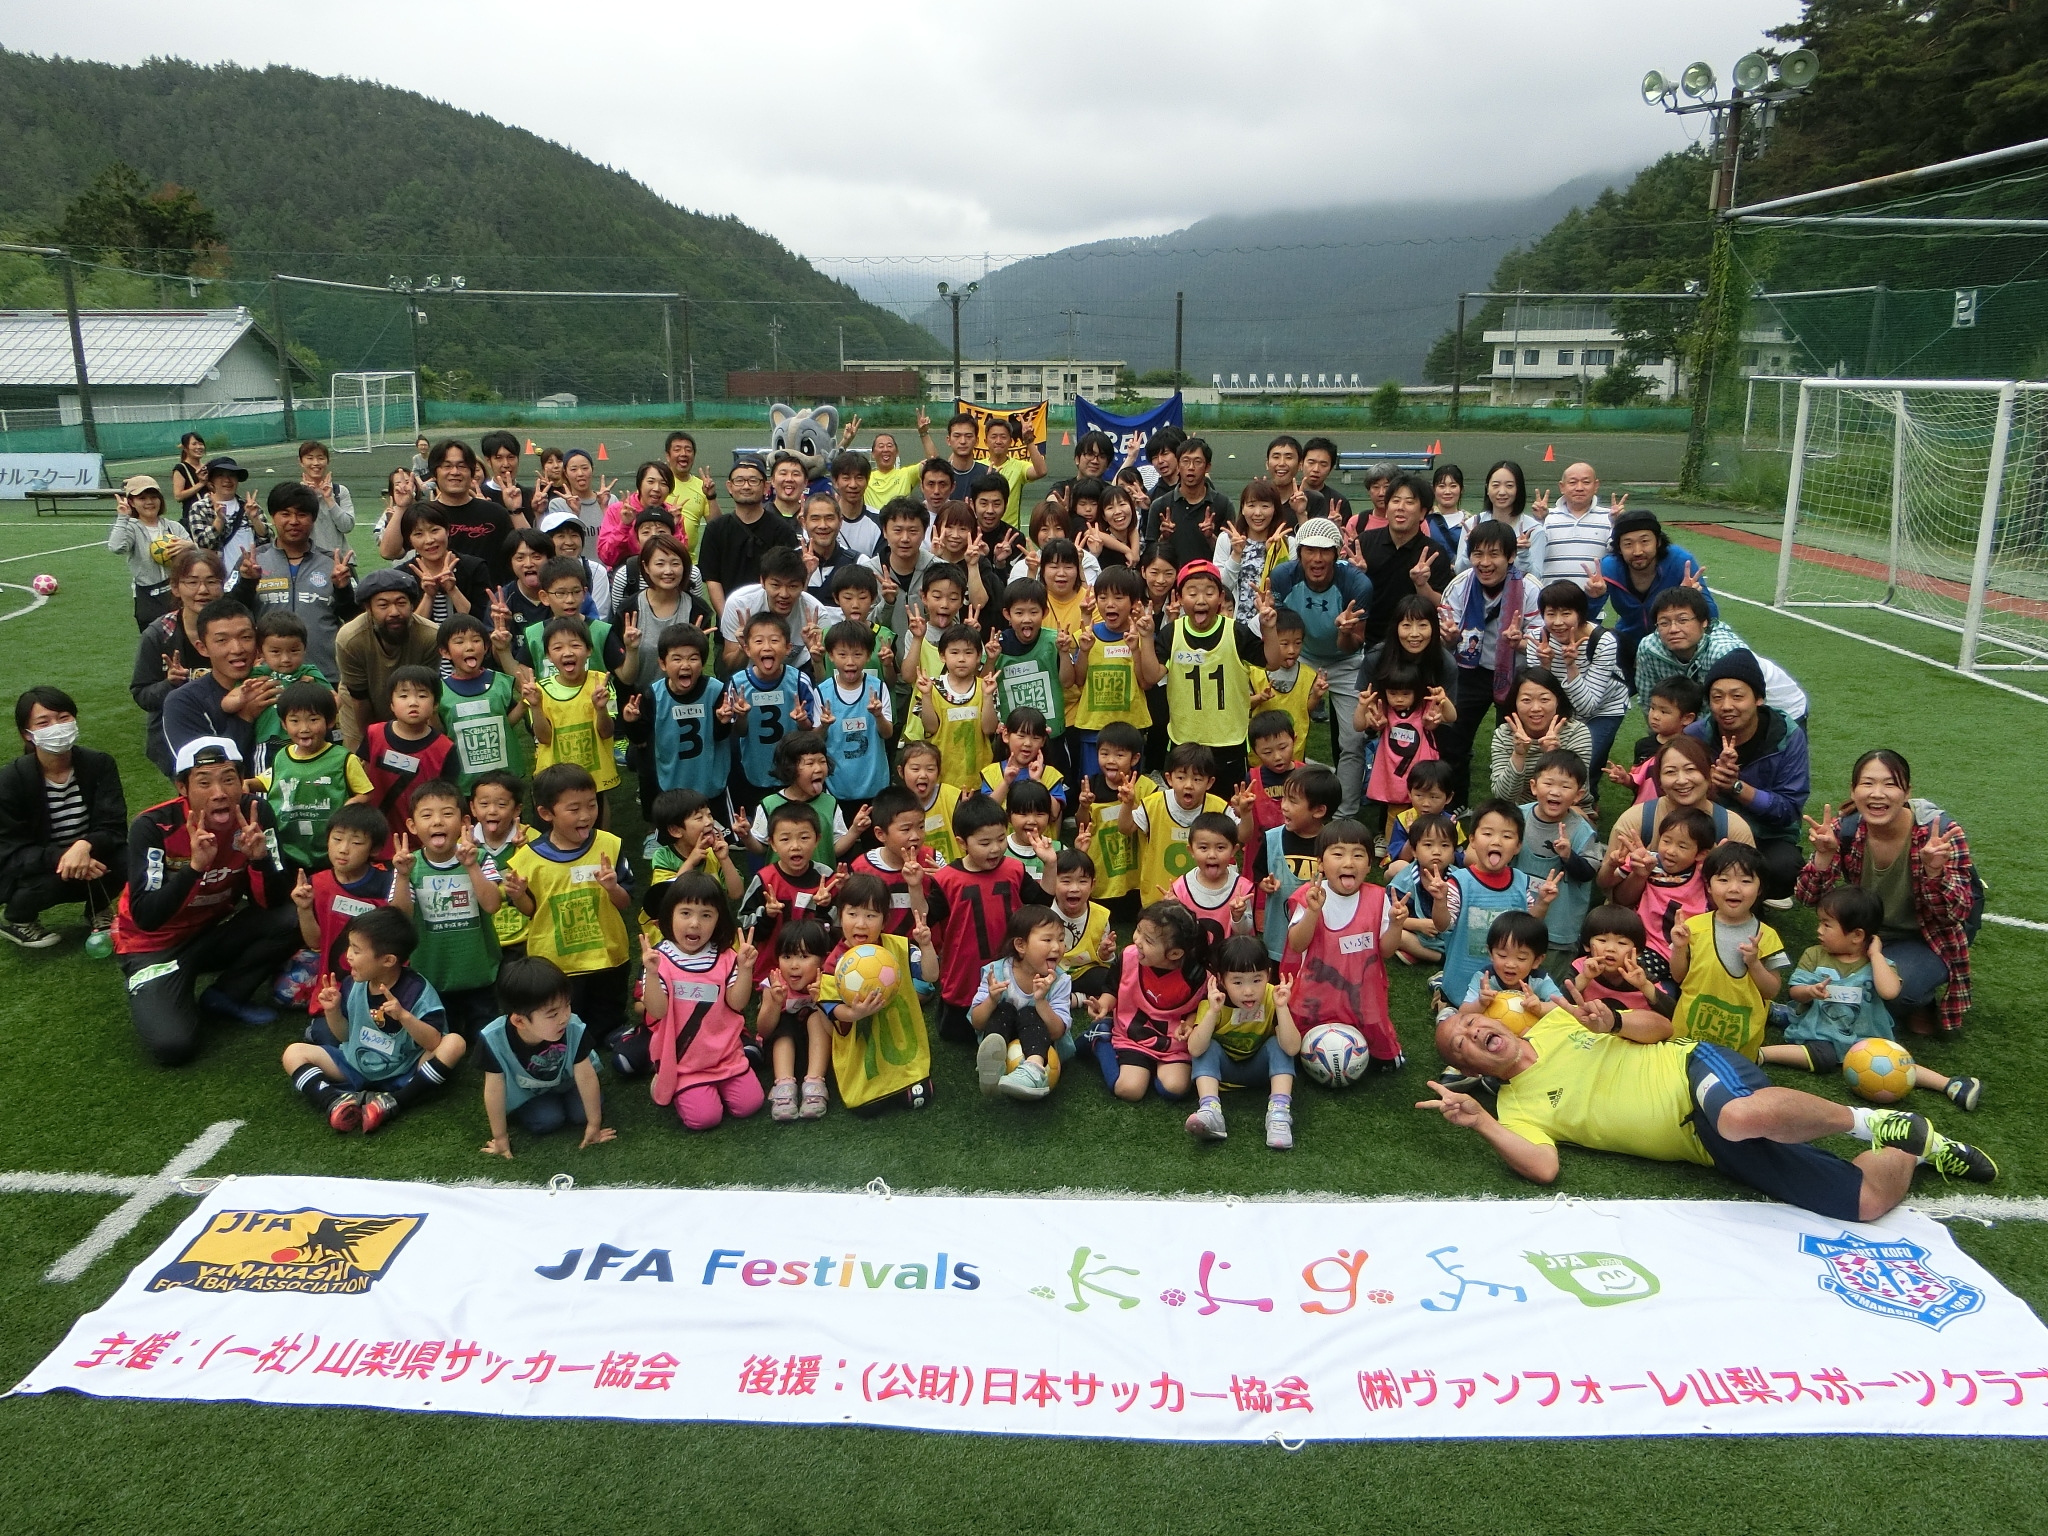 Jfaキッズ U 6 8 サッカーフェスティバル In 西桂町三つ峠グリーンセンター Jfa 公益財団法人日本サッカー協会